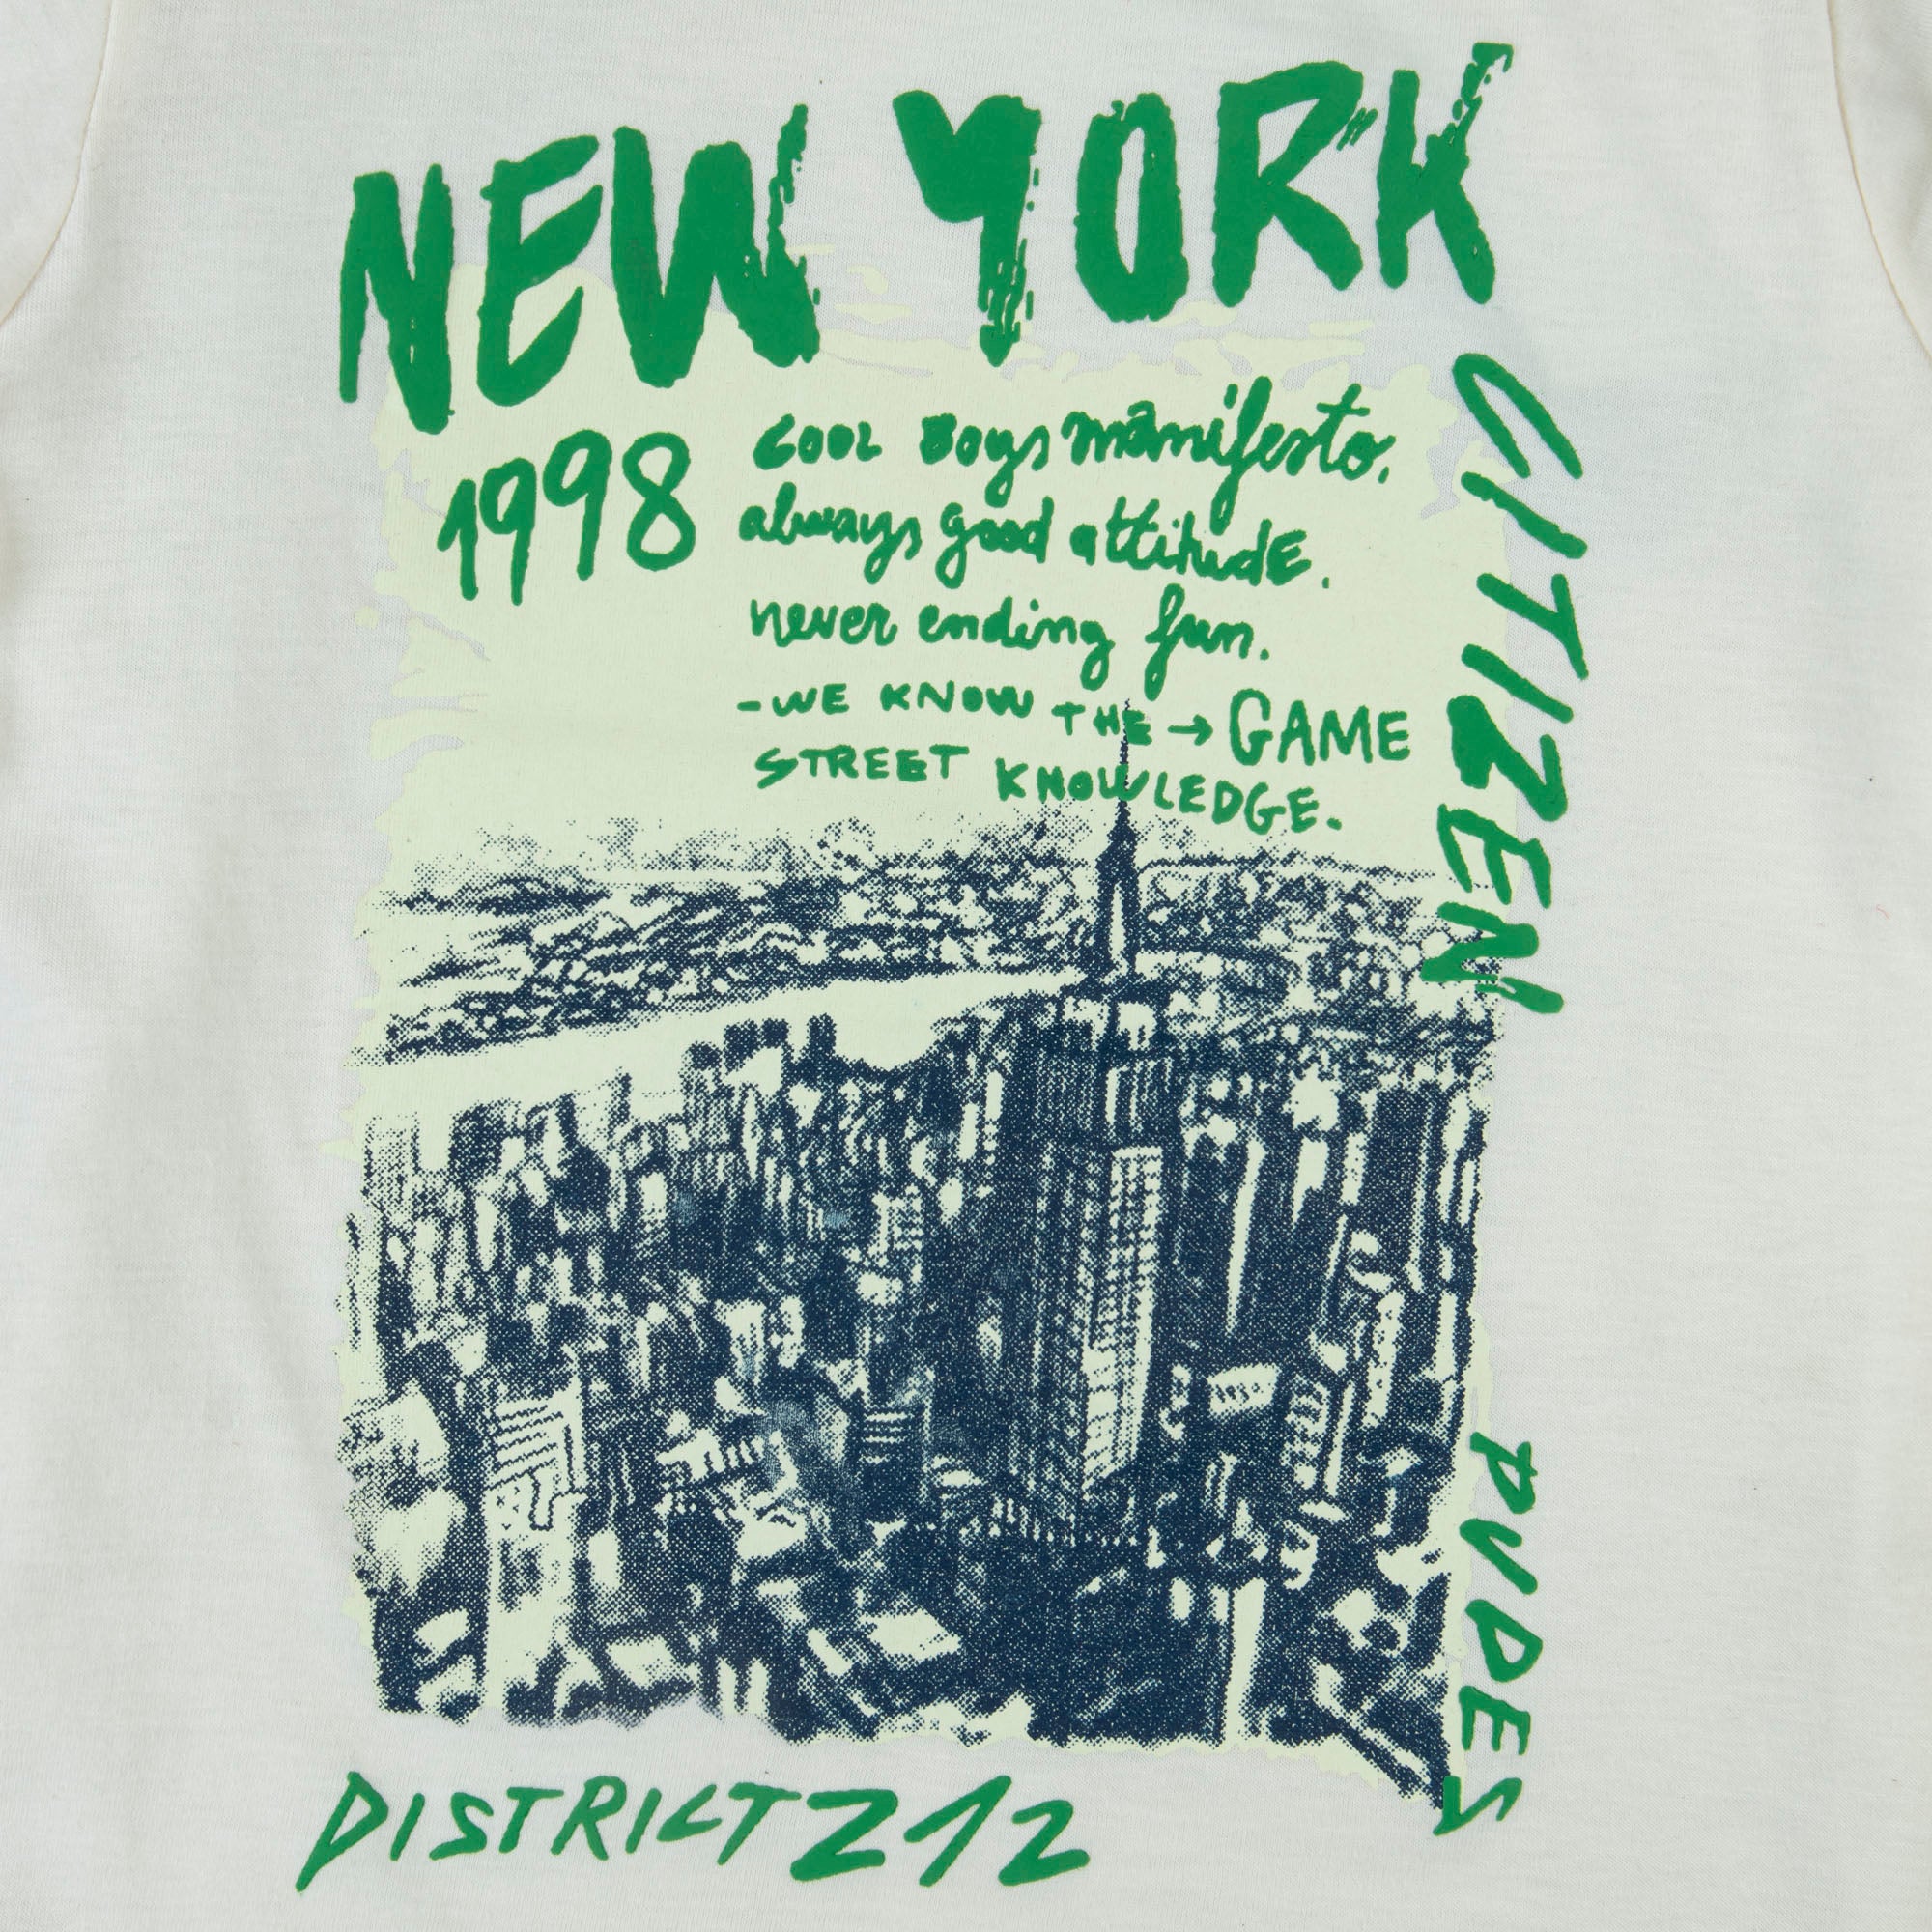 Newyork 1998 T-shirt